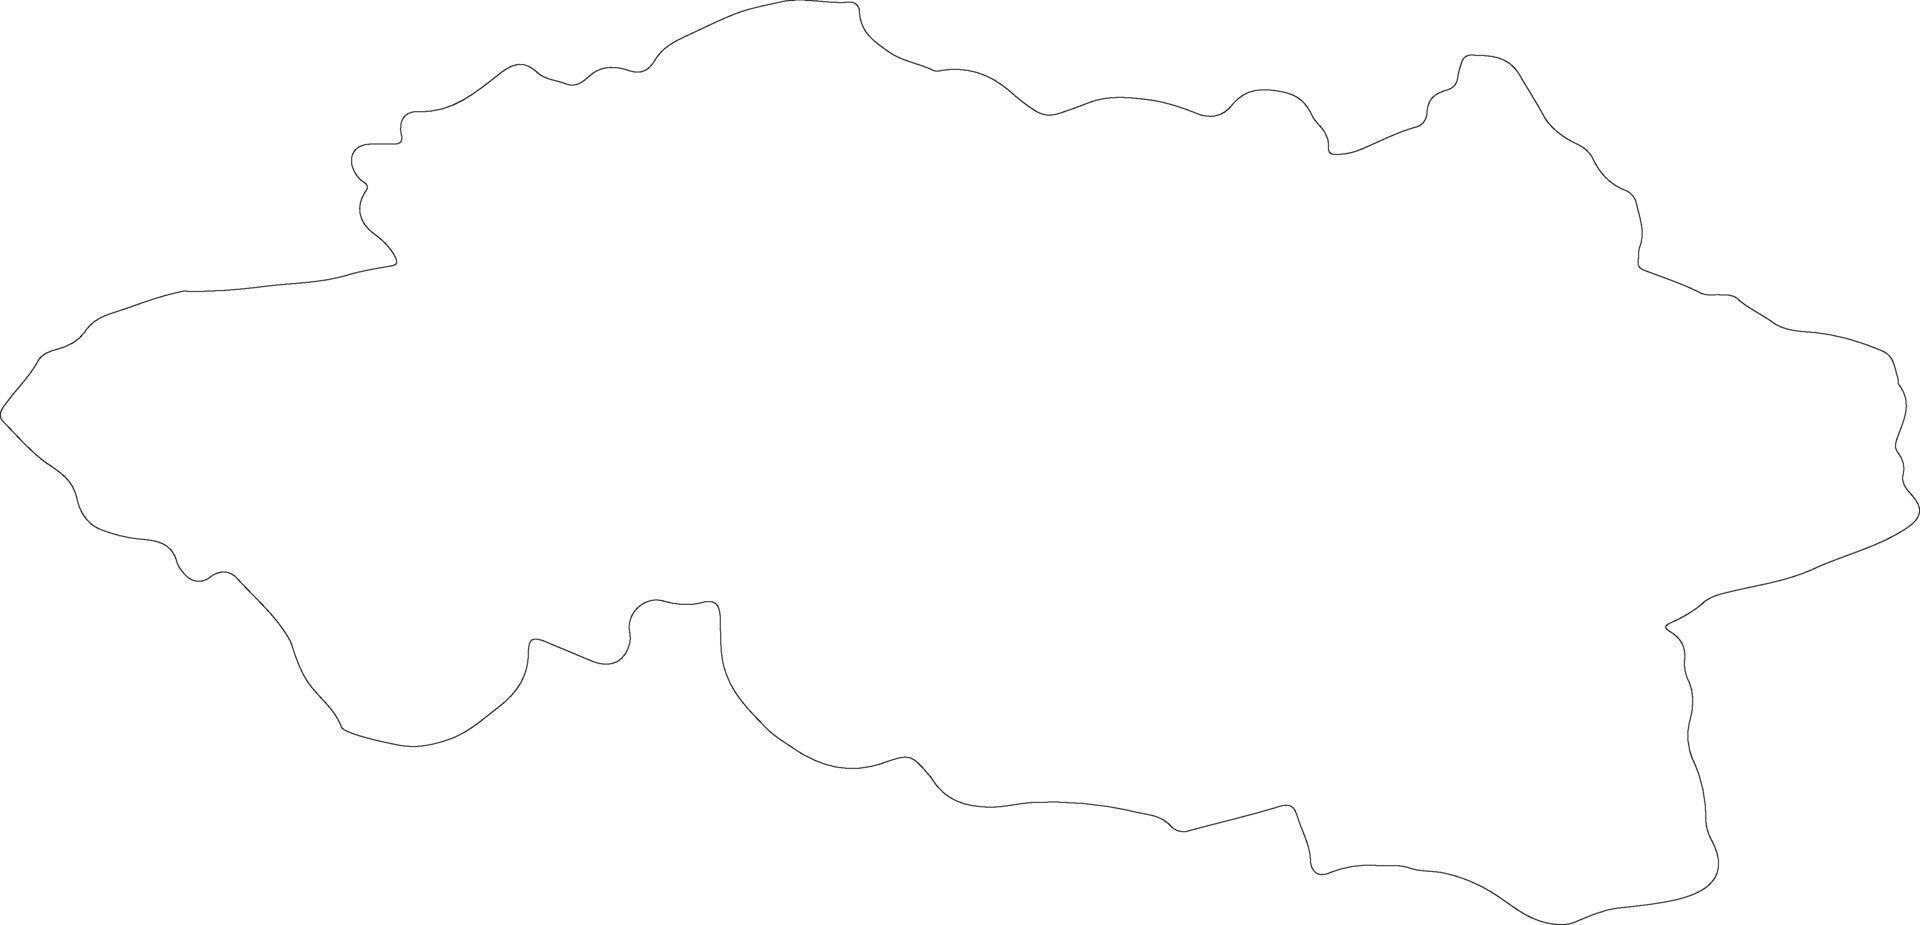 Allier France outline map vector